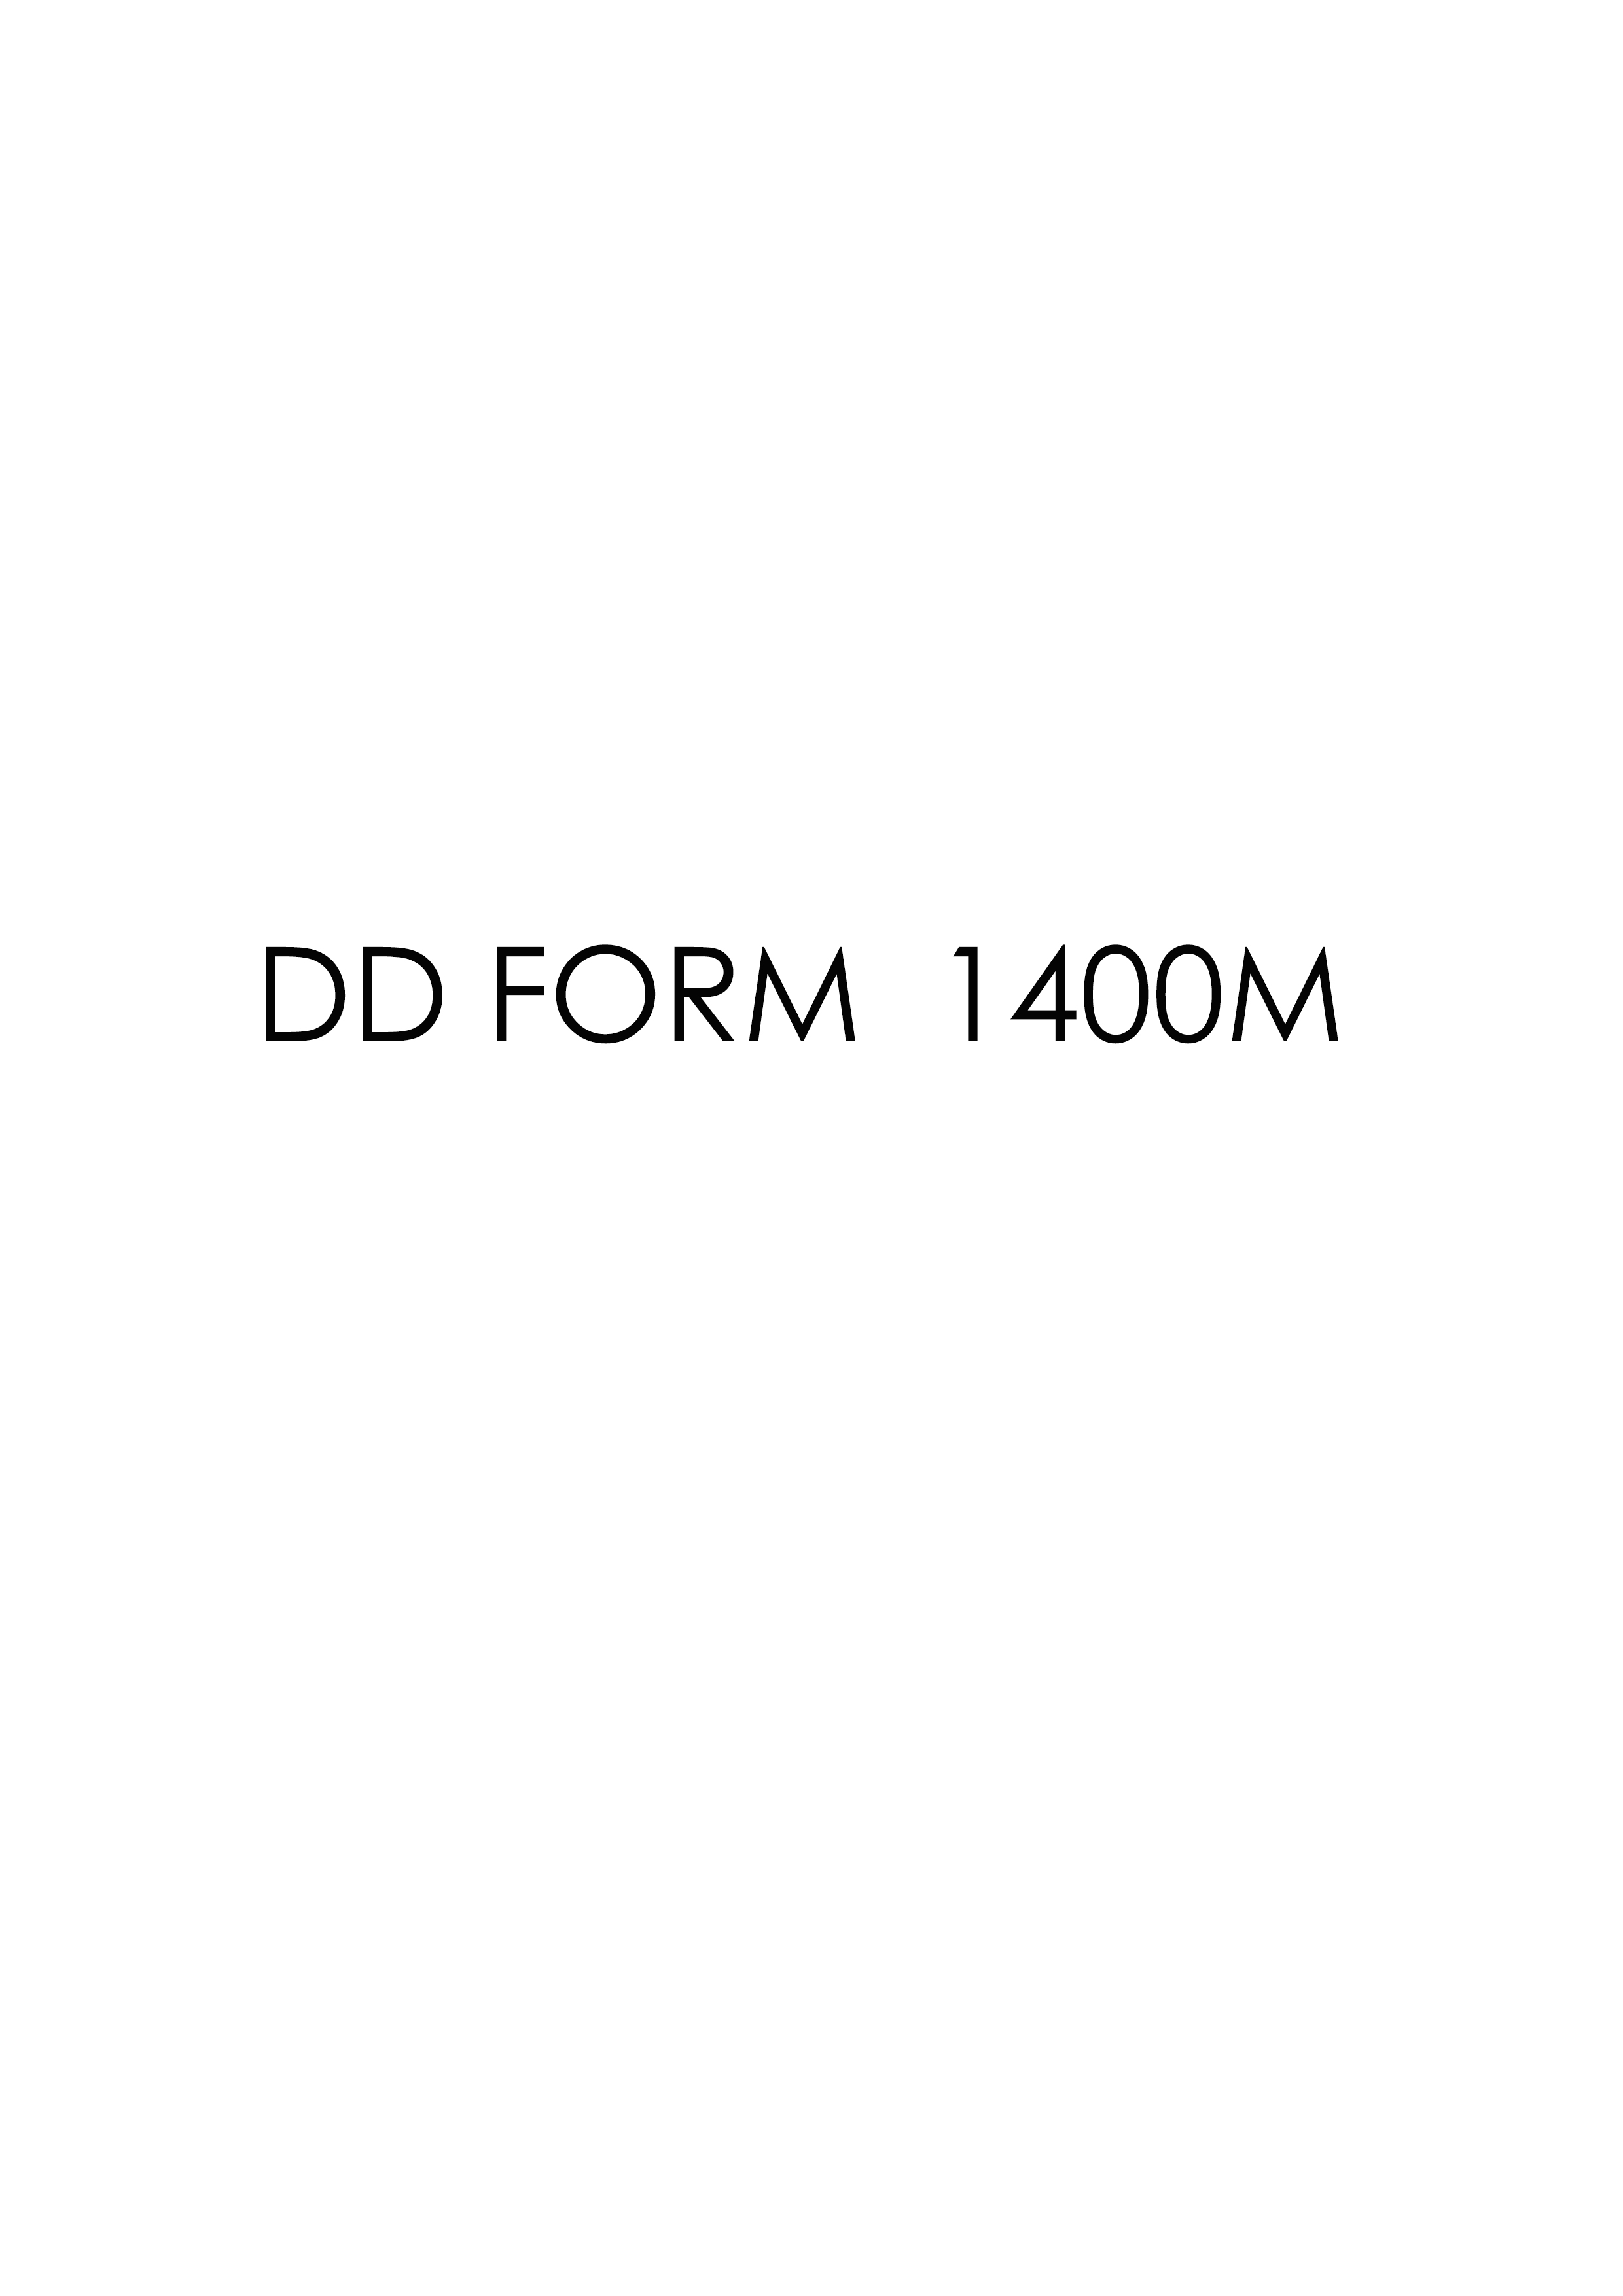 Download dd form 1400M